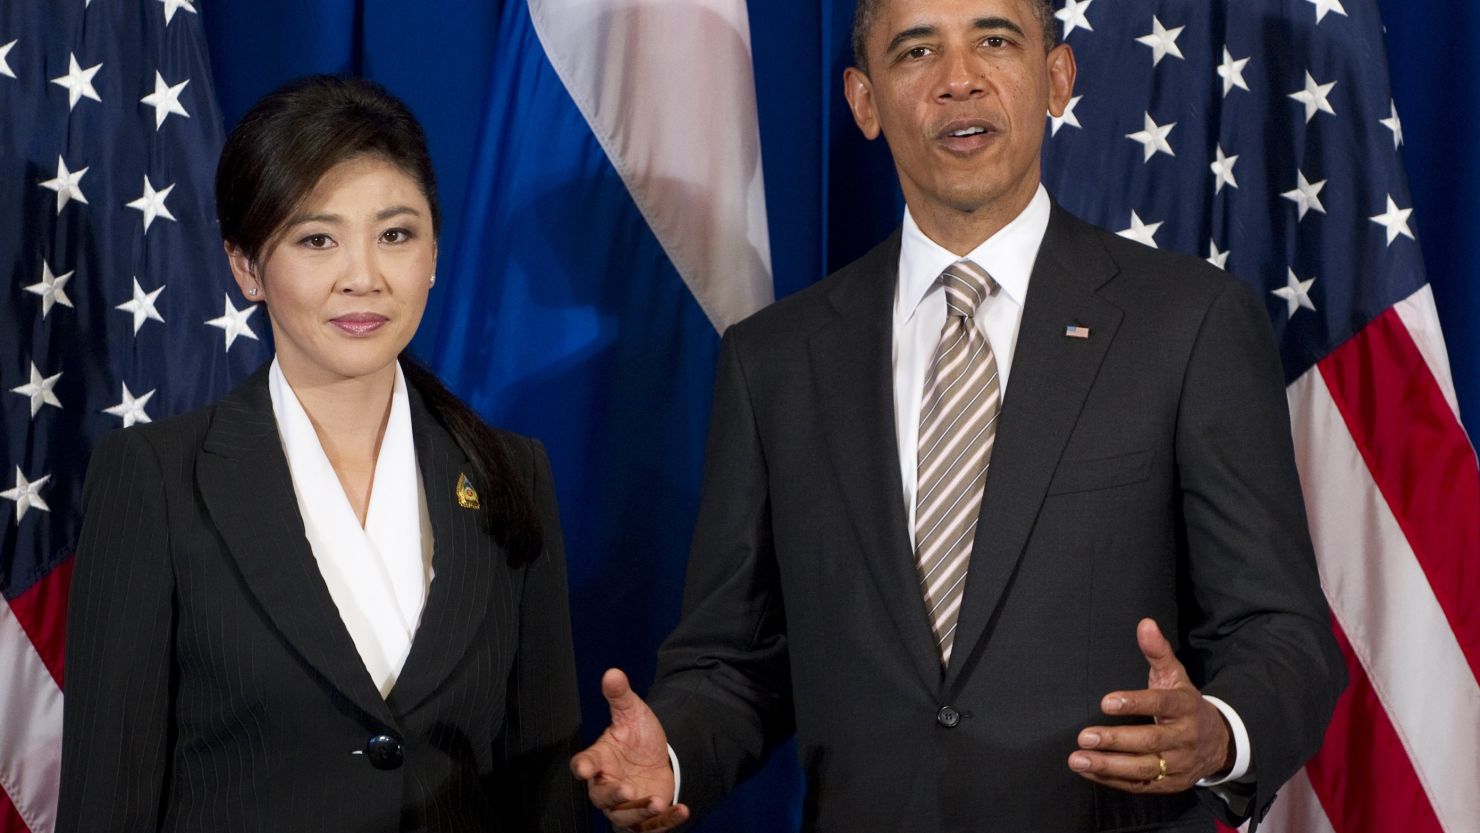 U.S. President Barack Obama speaks alongside Thailand Prime Minister Yingluck Shinawatra at the East Asia Summit on November 19.